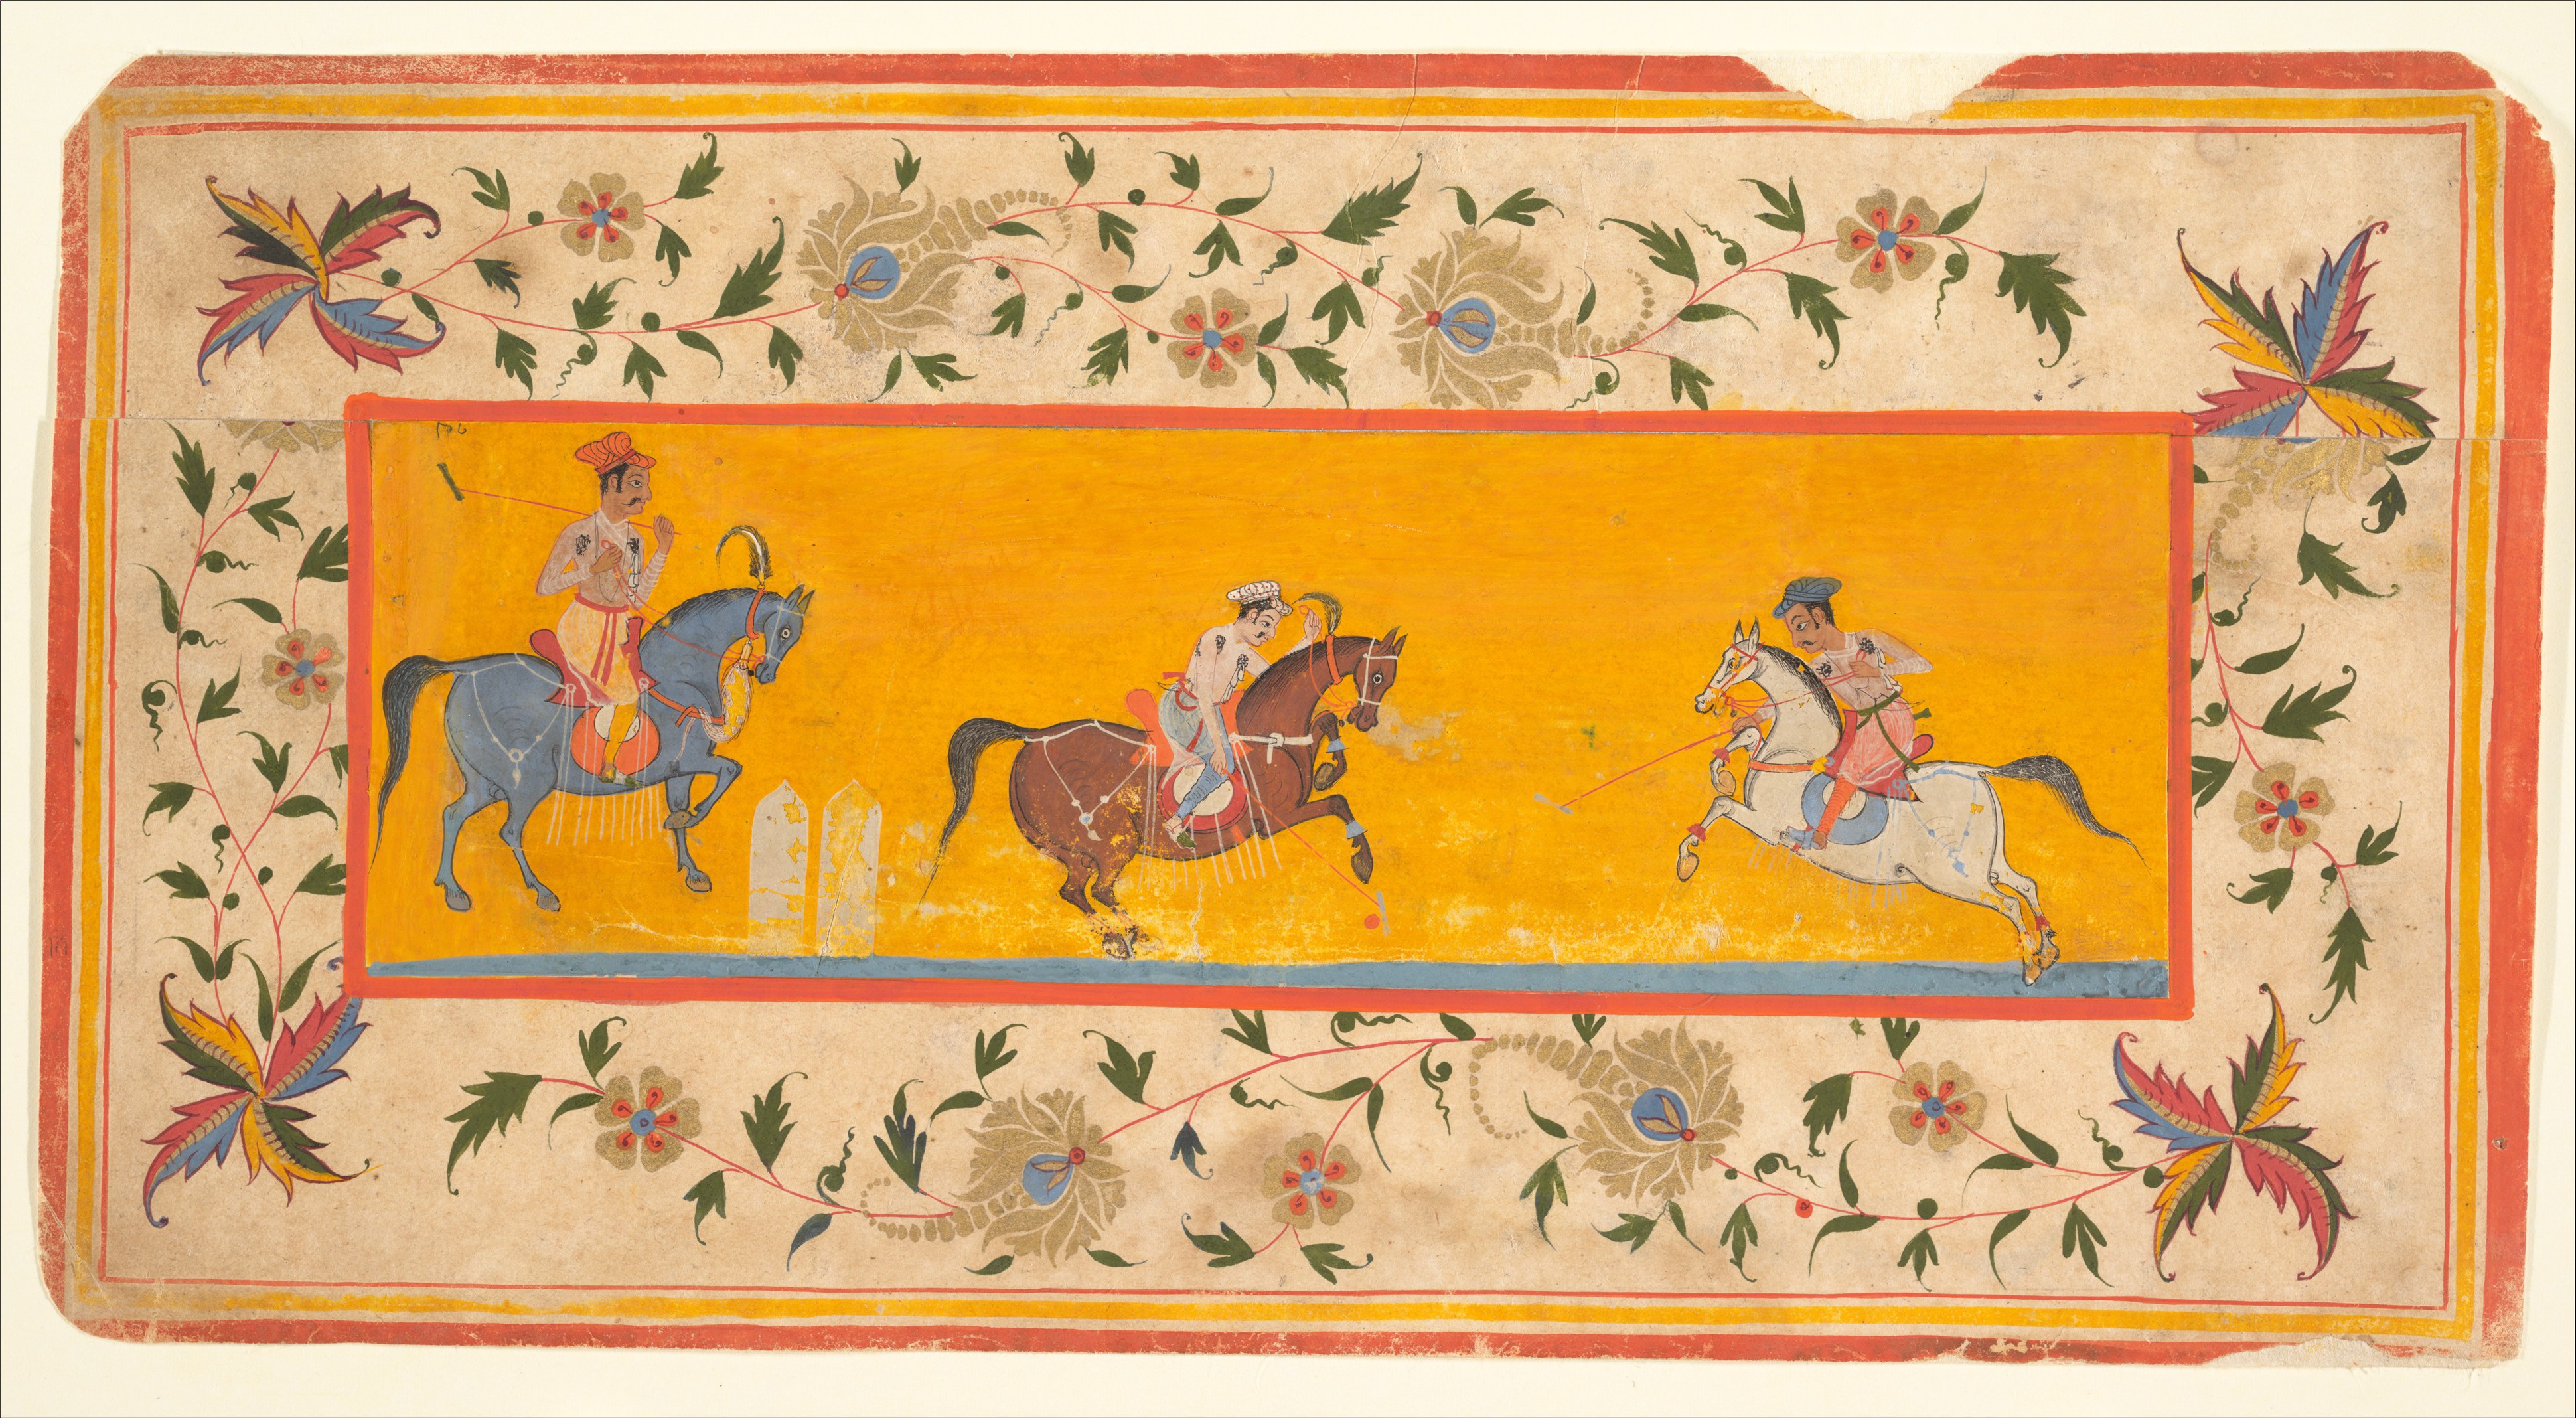 Rajasthan Camel Polo Miniature Artwork Handmade Indian Royal Sport